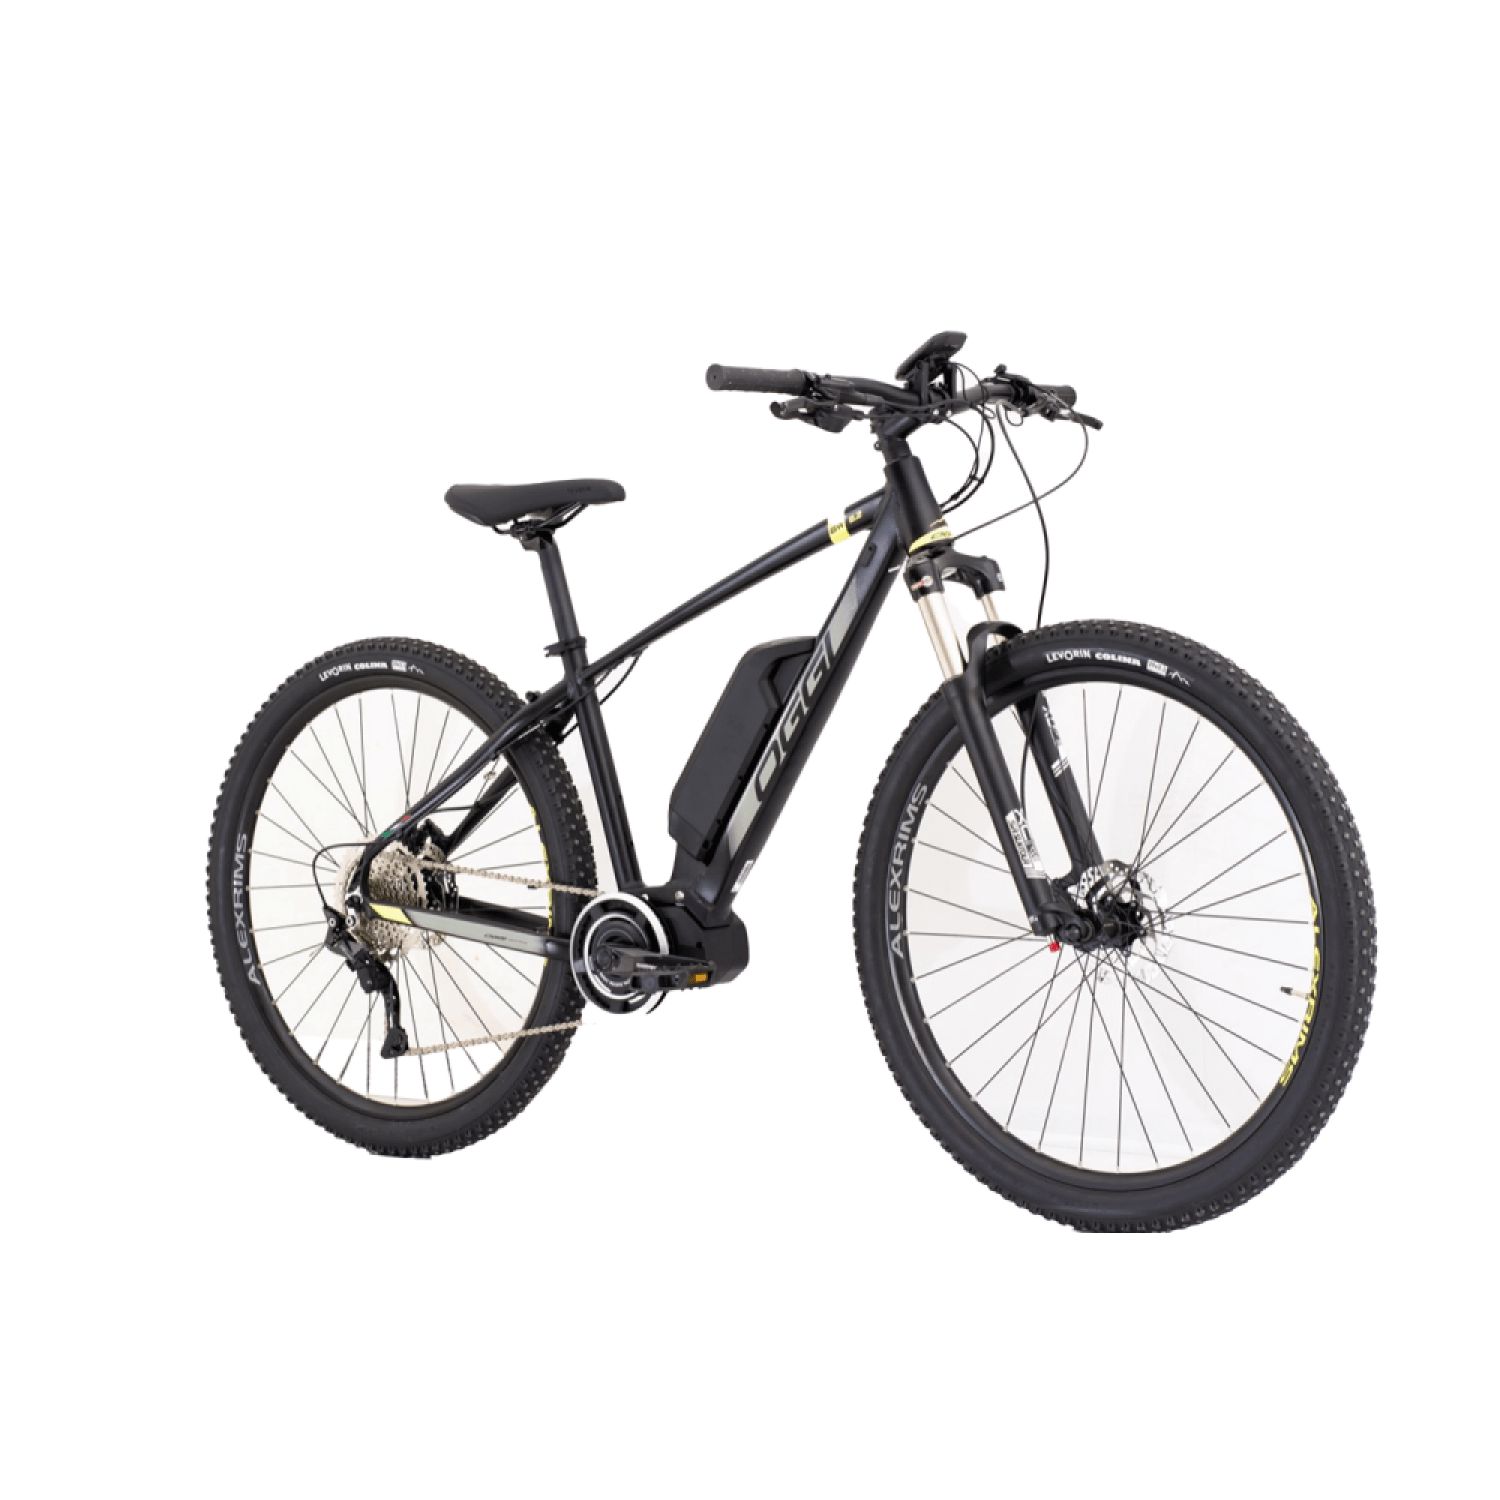 Bicicleta elétrica Oggi Big Wheel 8.2 aro 29" Shimano E6002 preto e cinza -  Ciclo Urbano Bicicletas